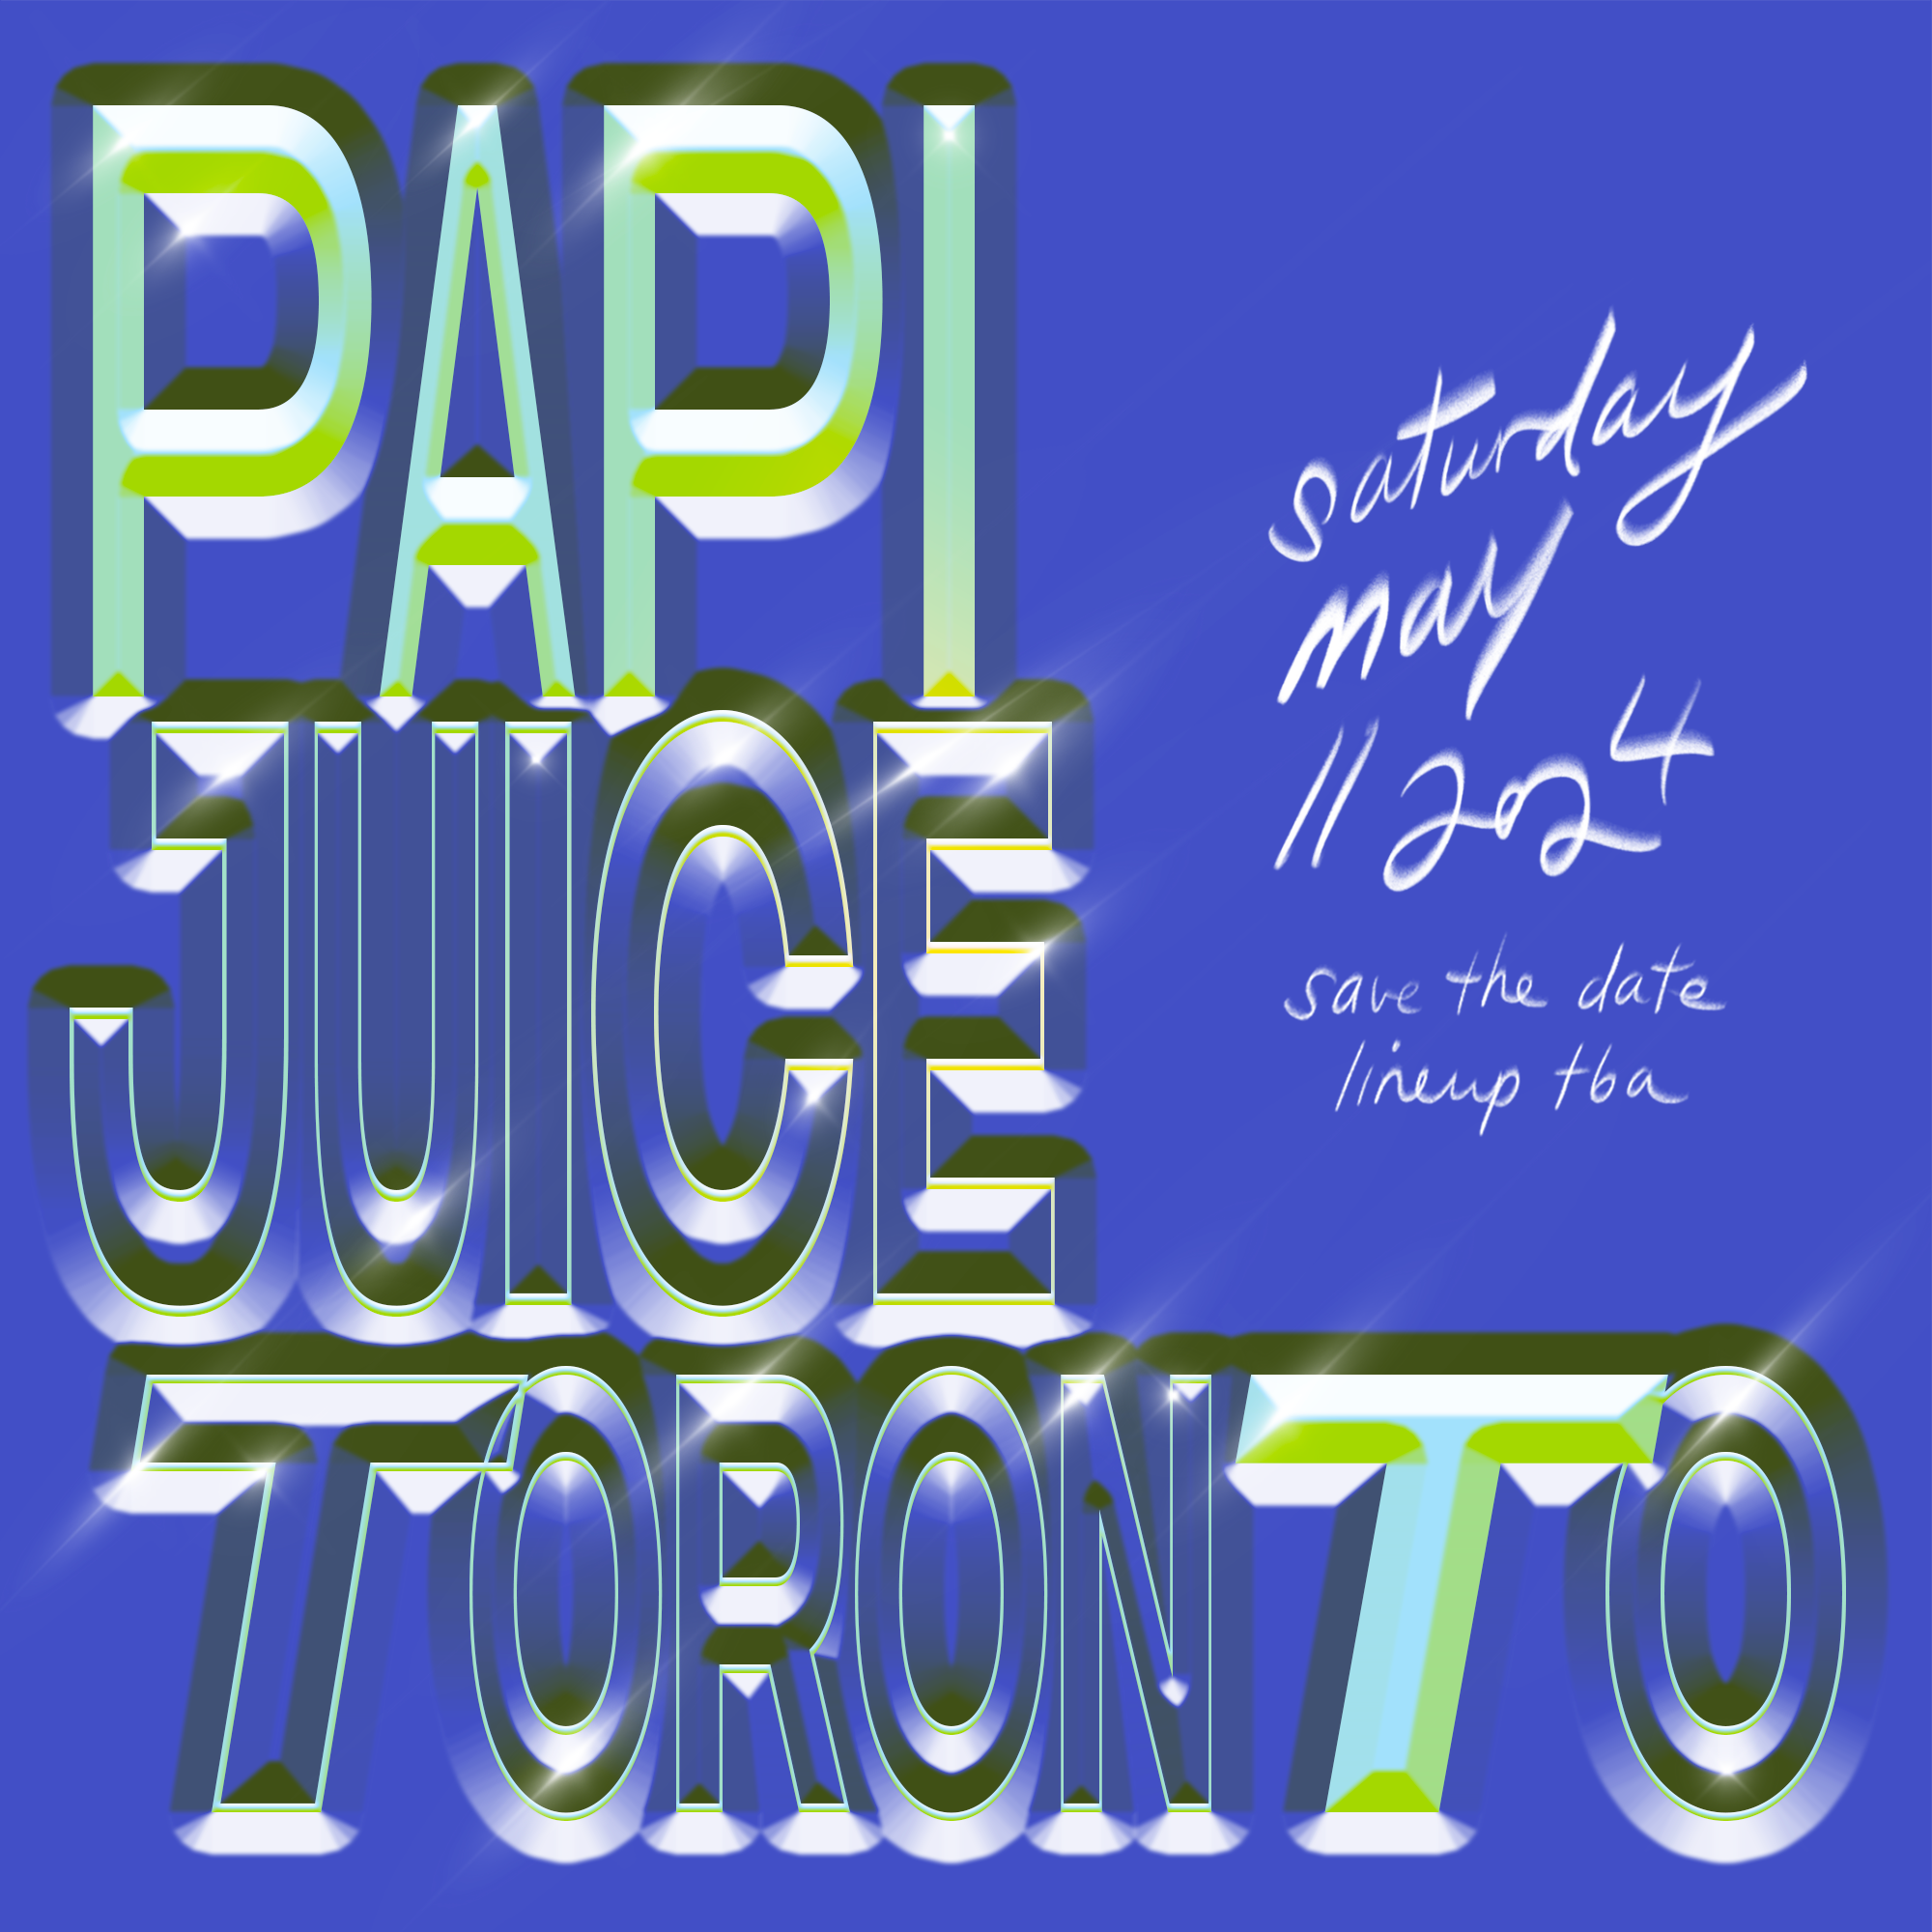 PAPI JUICE Toronto - フライヤー裏